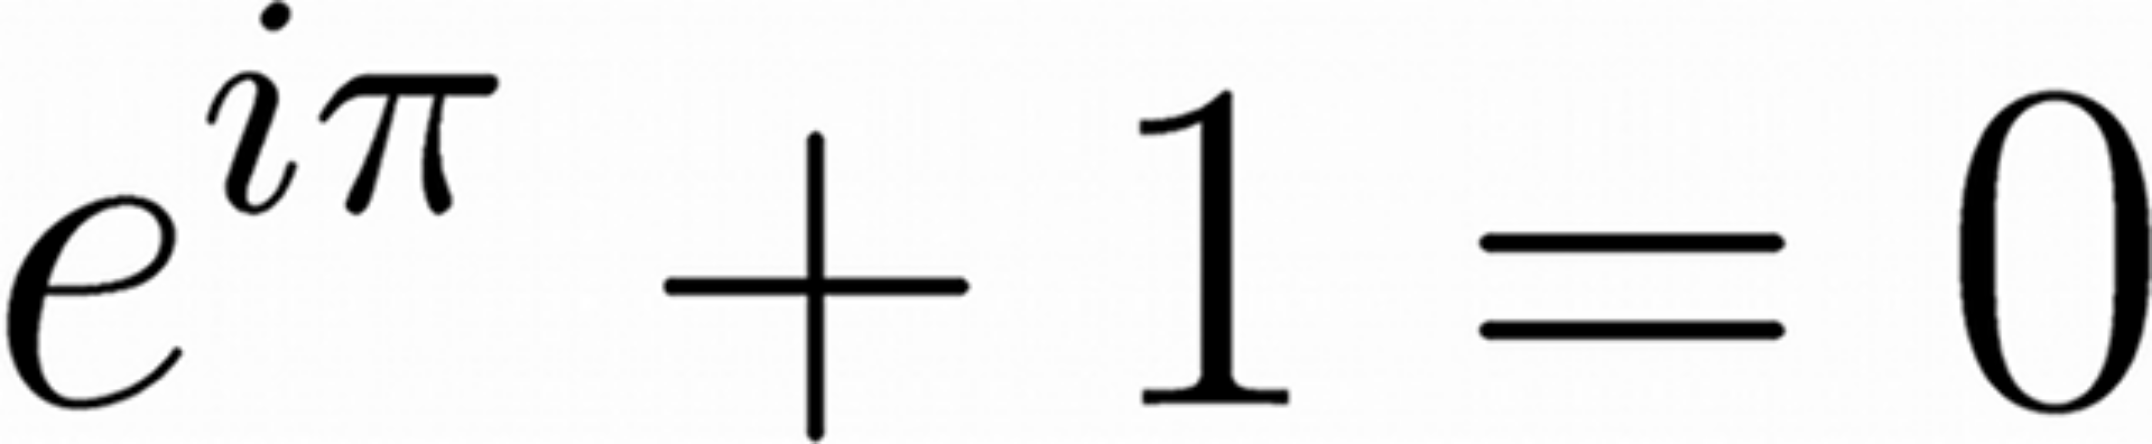 7 - Equation